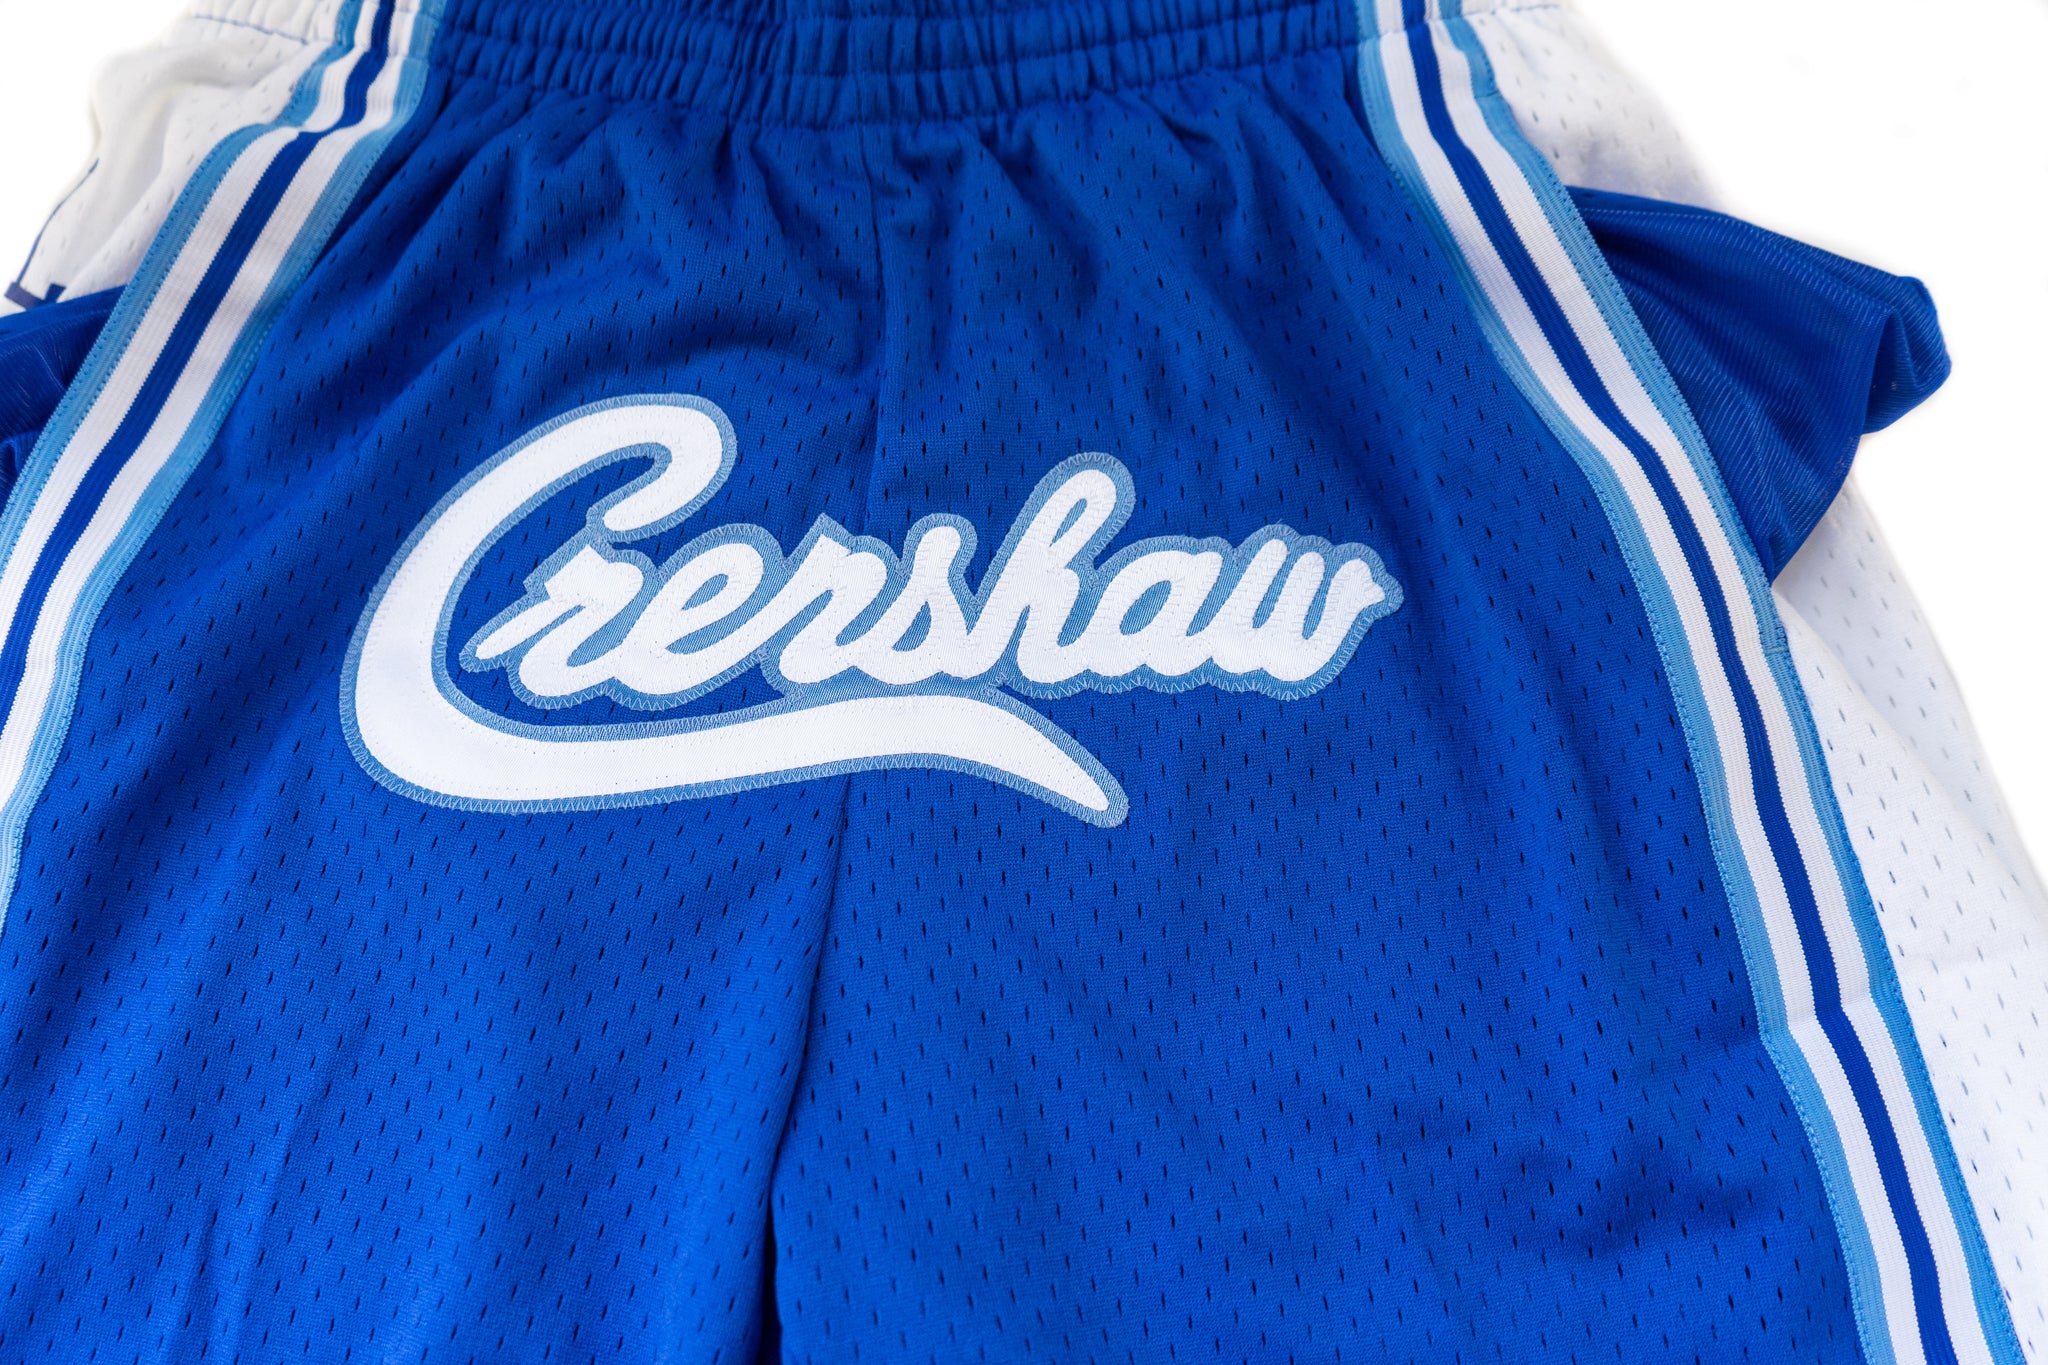 Mitchell & Ness Los Angeles Lakers "Crenshaw" Swingman Shorts